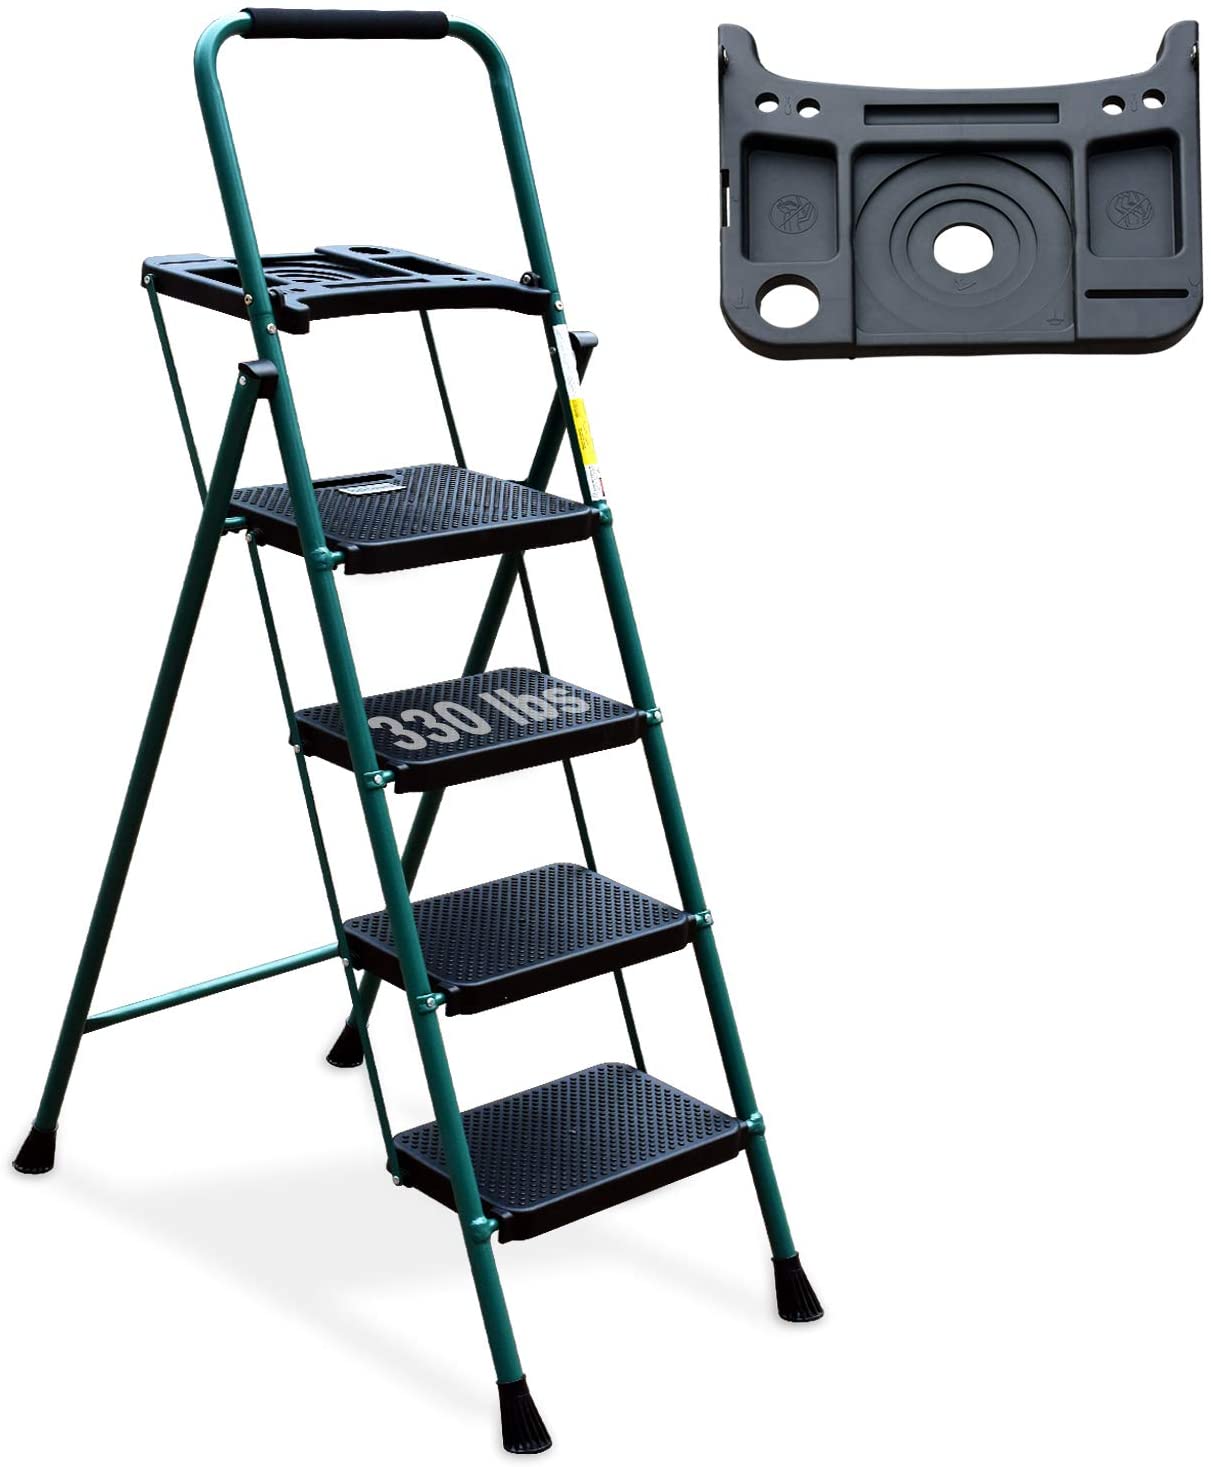 4 Step Ladder, HBTower Folding Step Stool with Tool Platform, Wide Anti-Slip Pedal, Sturdy Steel Ladder, Convenient Handgrip, Lightweight 330lbs Portable